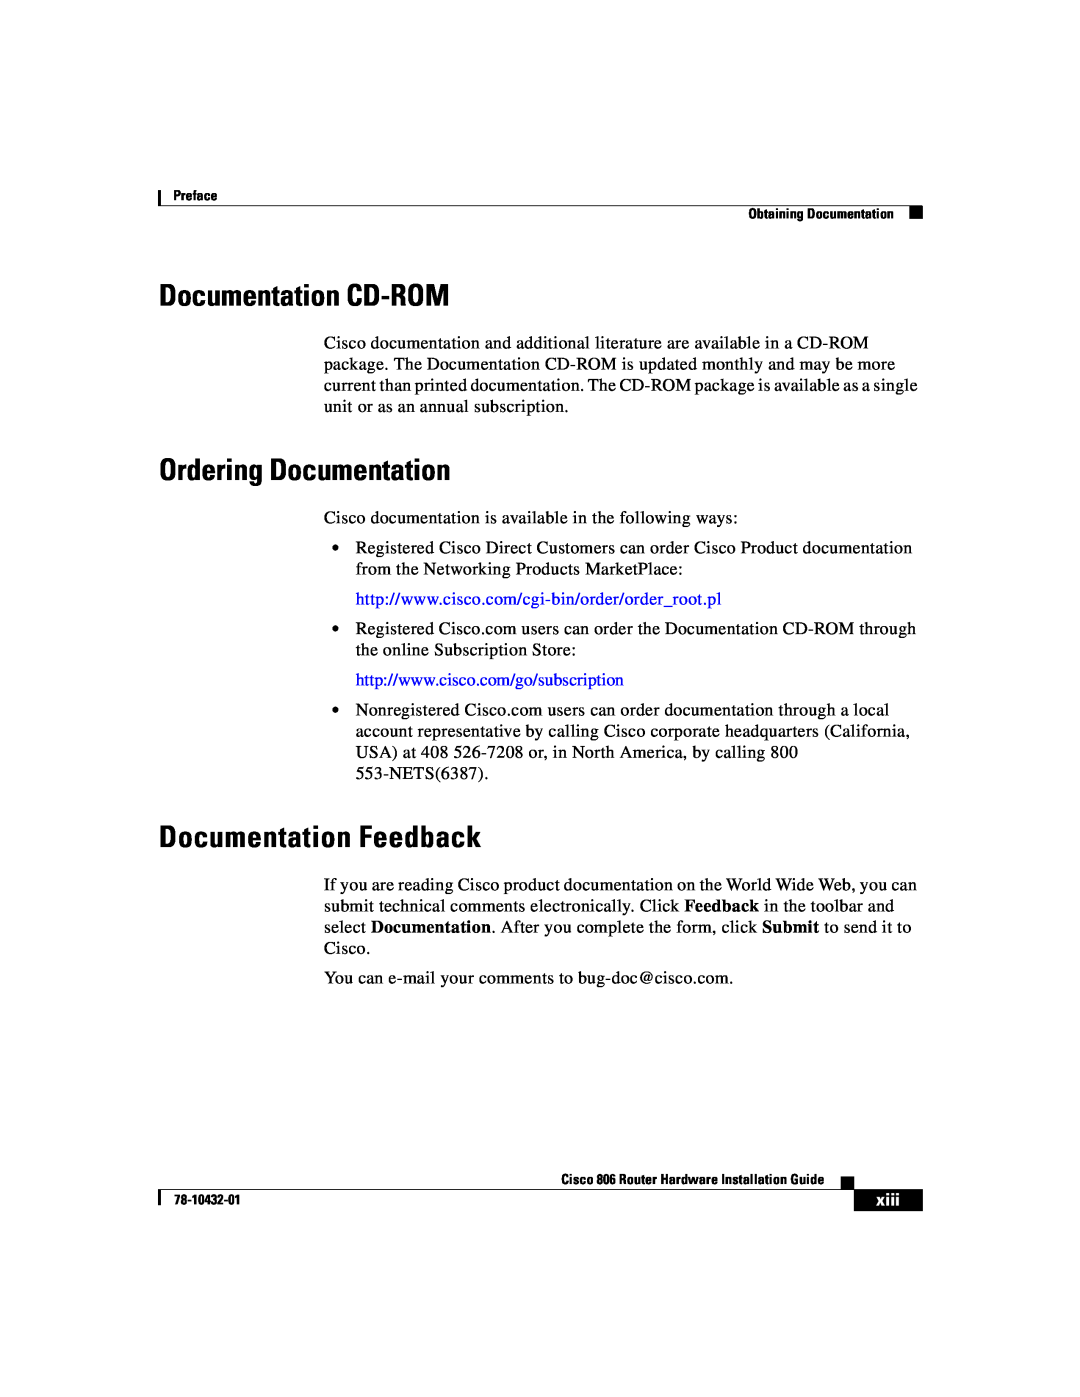 Cisco Systems 806 manual Documentation CD-ROM, Ordering Documentation, Documentation Feedback, xiii 